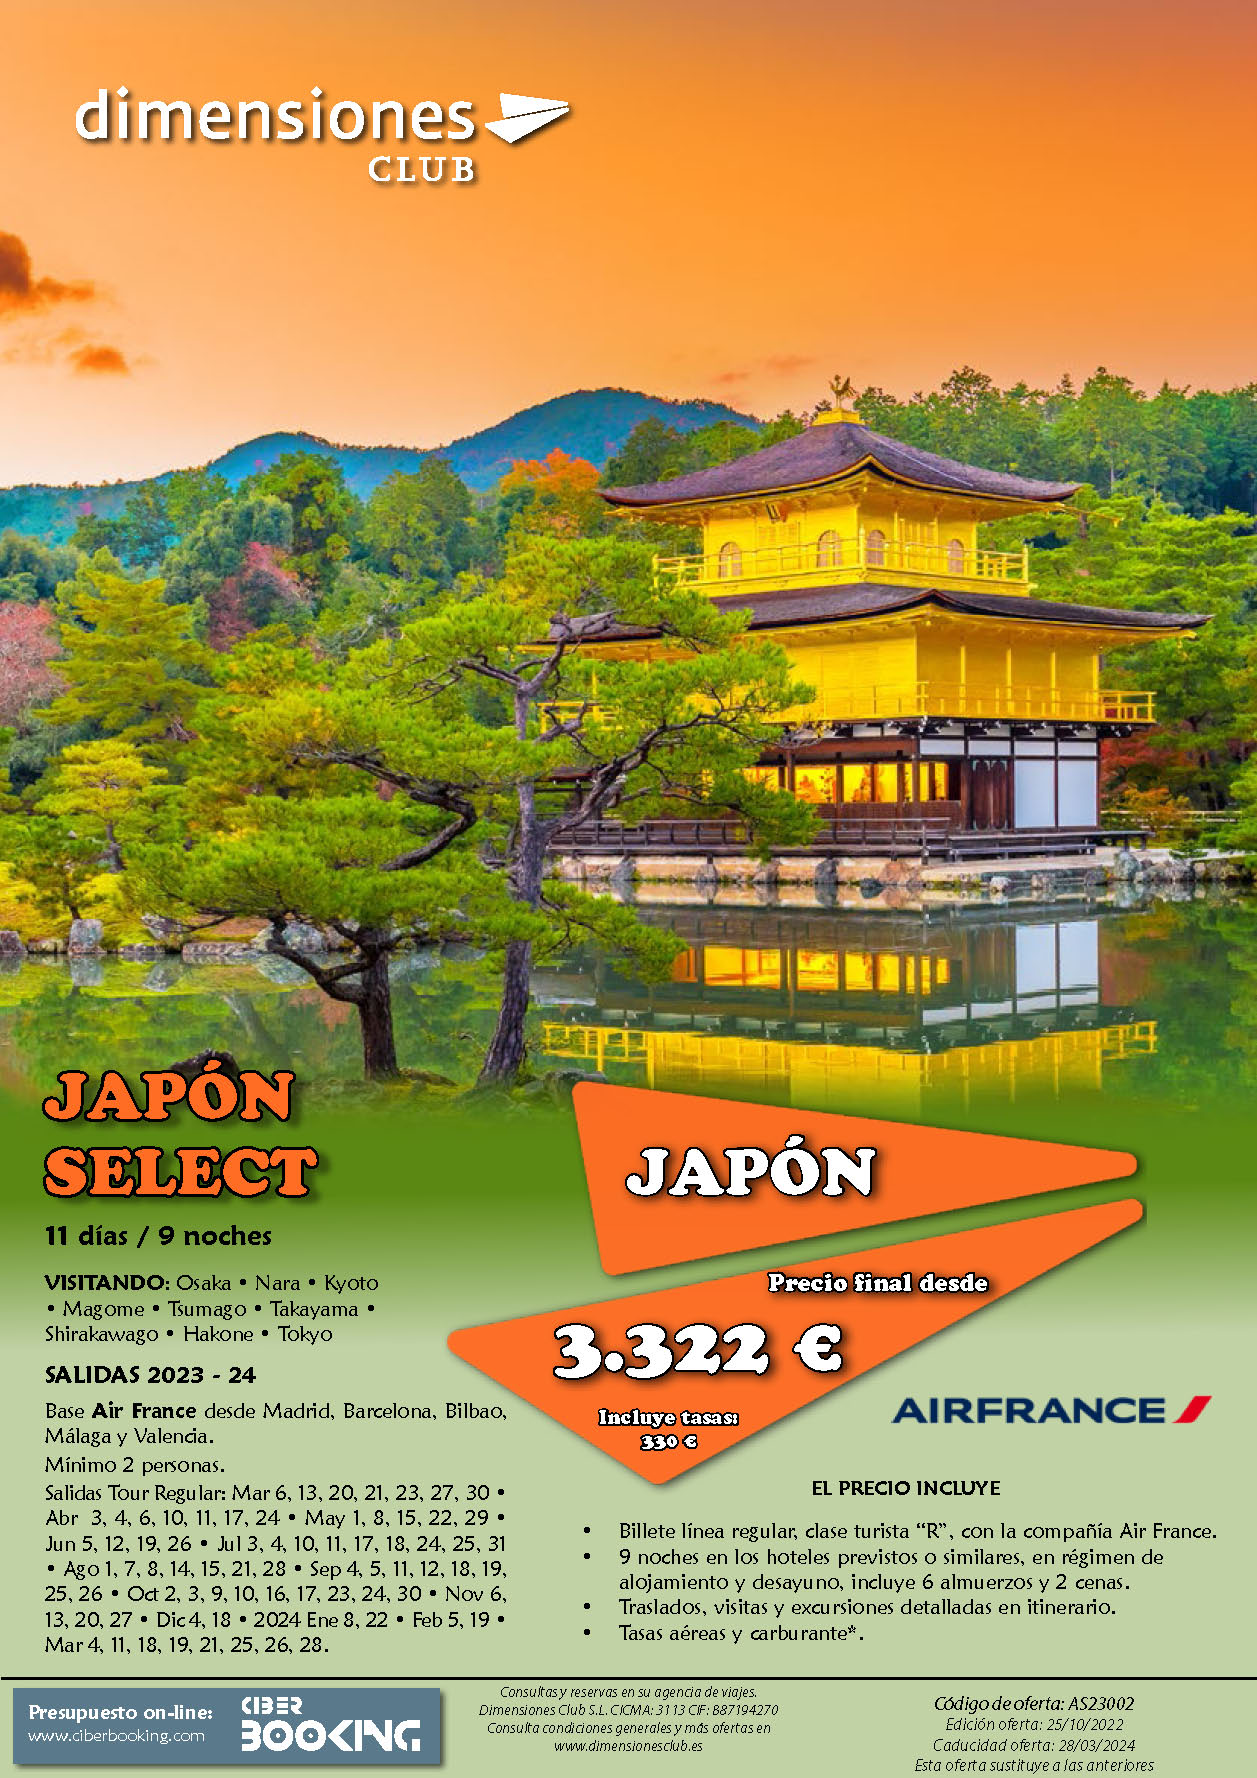 Oferta Dimensiones Club Japon Select 2023 11 dias salidas desde Madrid Barcelona Bilbao Valencia Malaga vuelos Air France